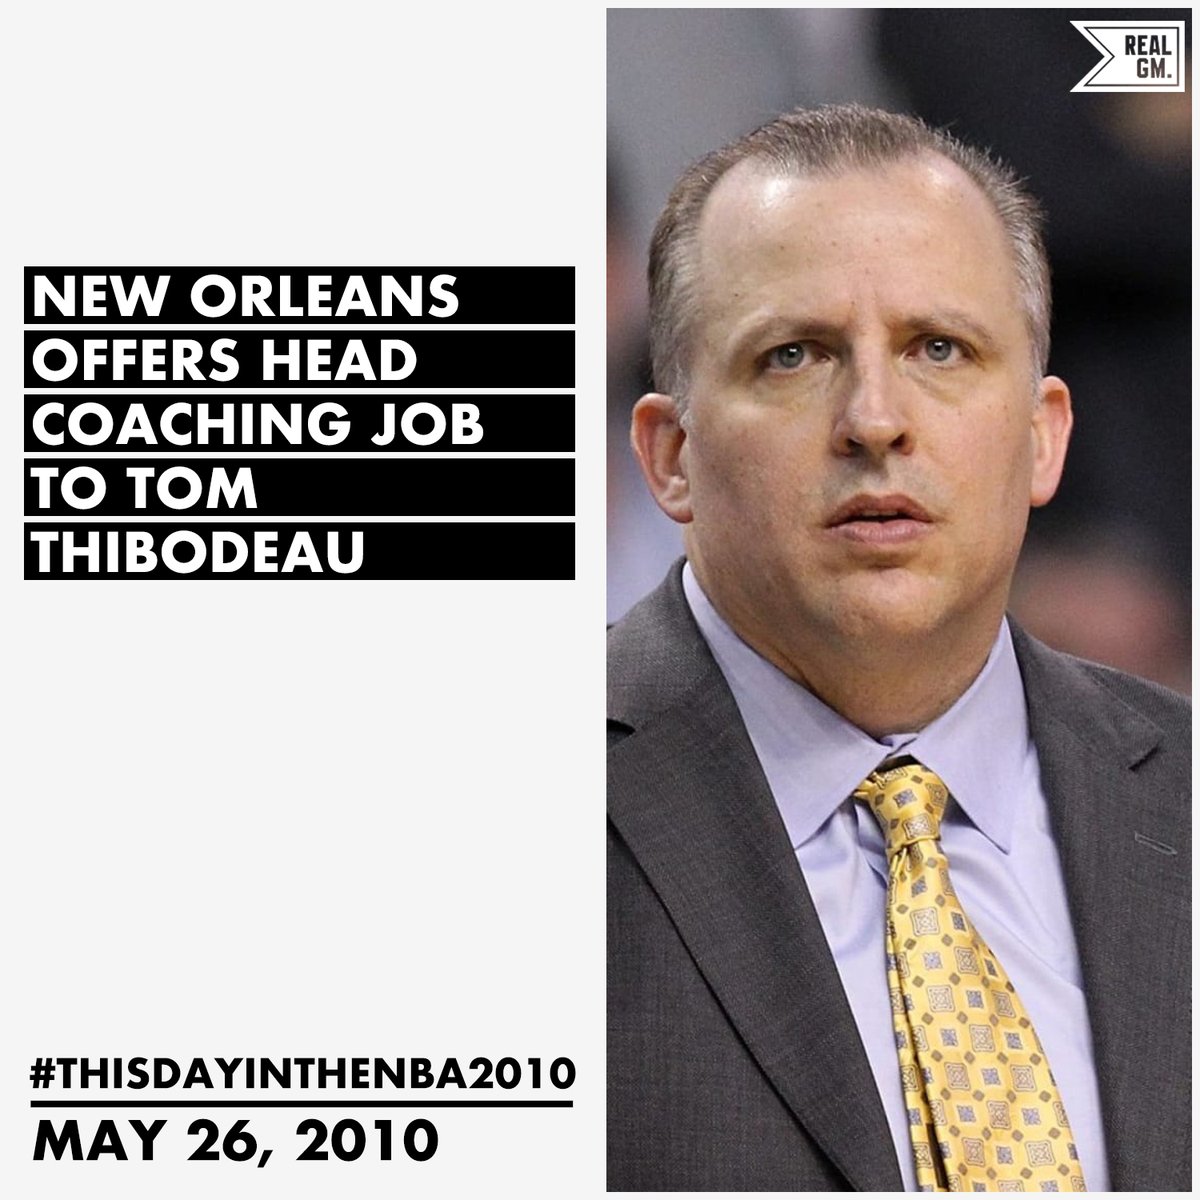  #ThisDayInTheNBA2010May 26, 2010New Orleans Offers Head Coaching Job To Tom Thibodeau https://basketball.realgm.com/wiretap/204132/New-Orleans-Offers-Head-Coaching-Job-To-Tom-Thibodeau